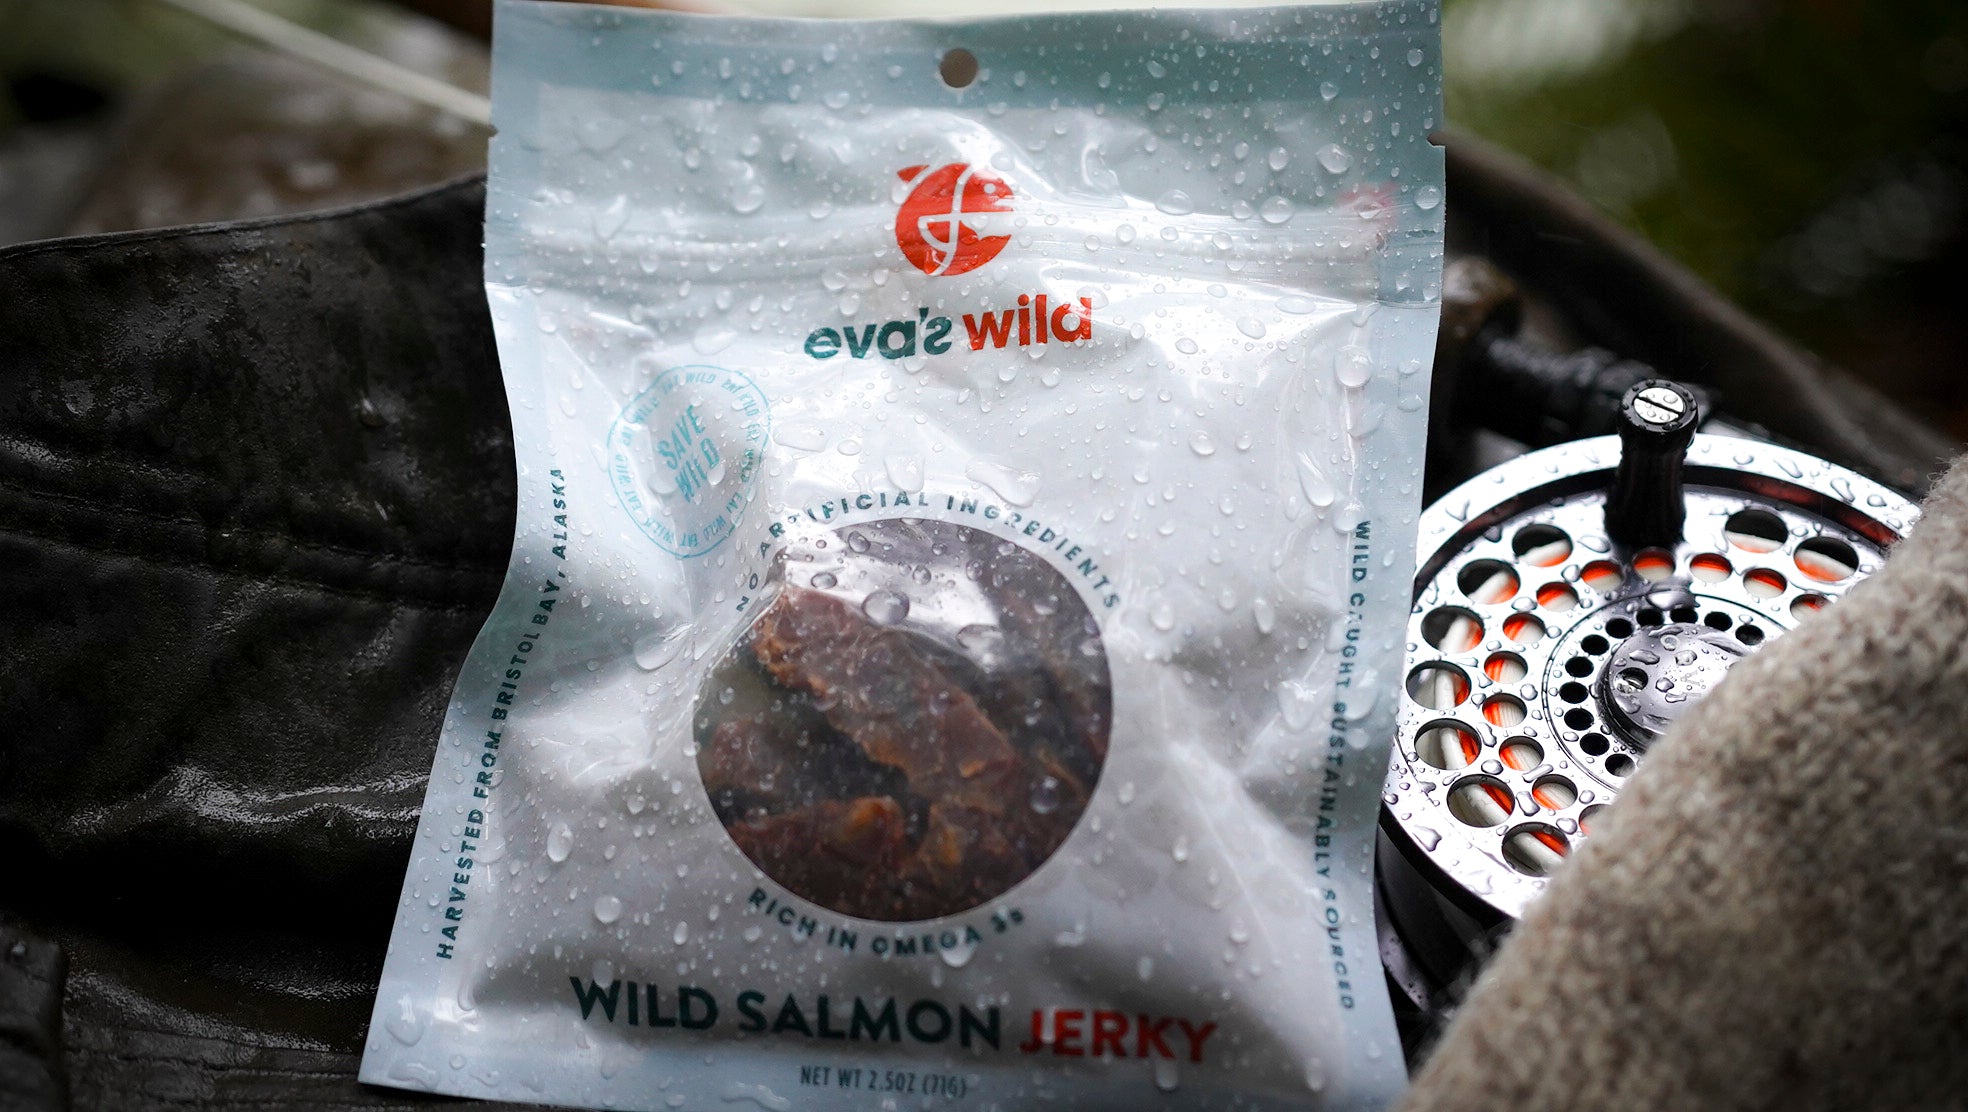 extra close up image of bag of Eva's Wild salmon jerky